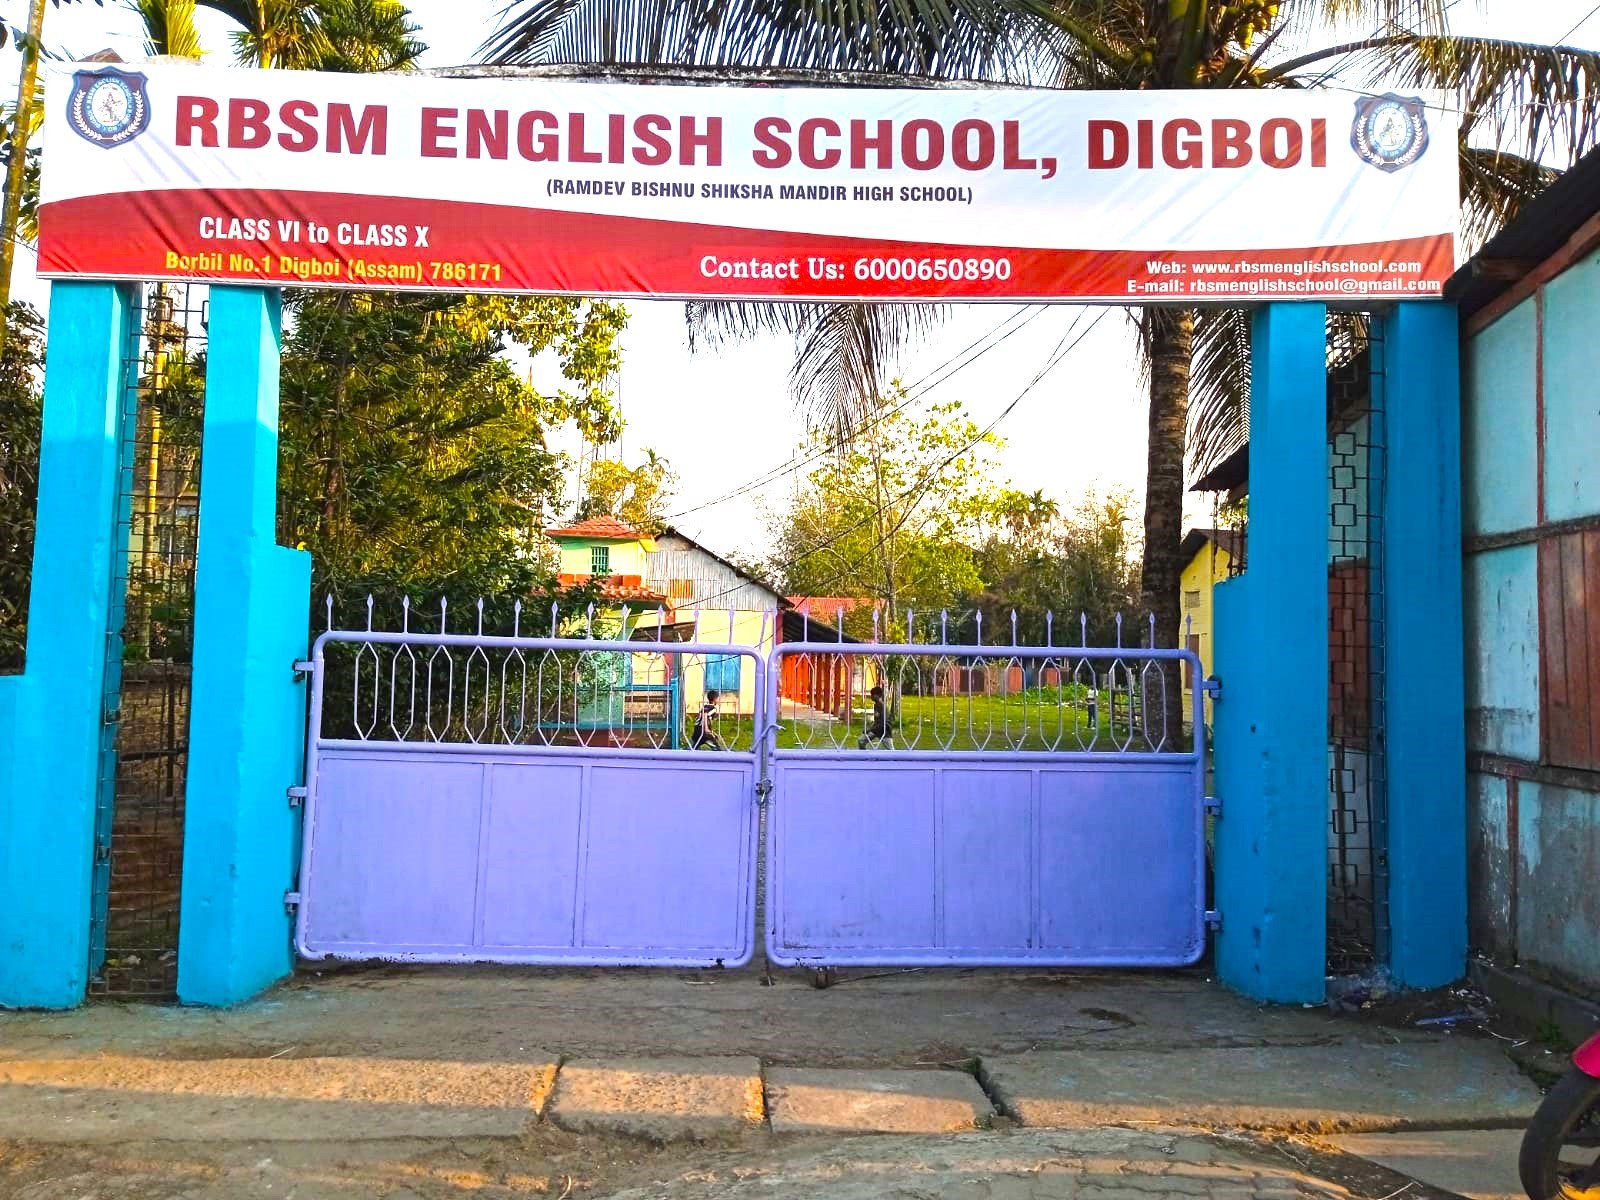 RBSM ENGLISH SHOOL, DIGBOI